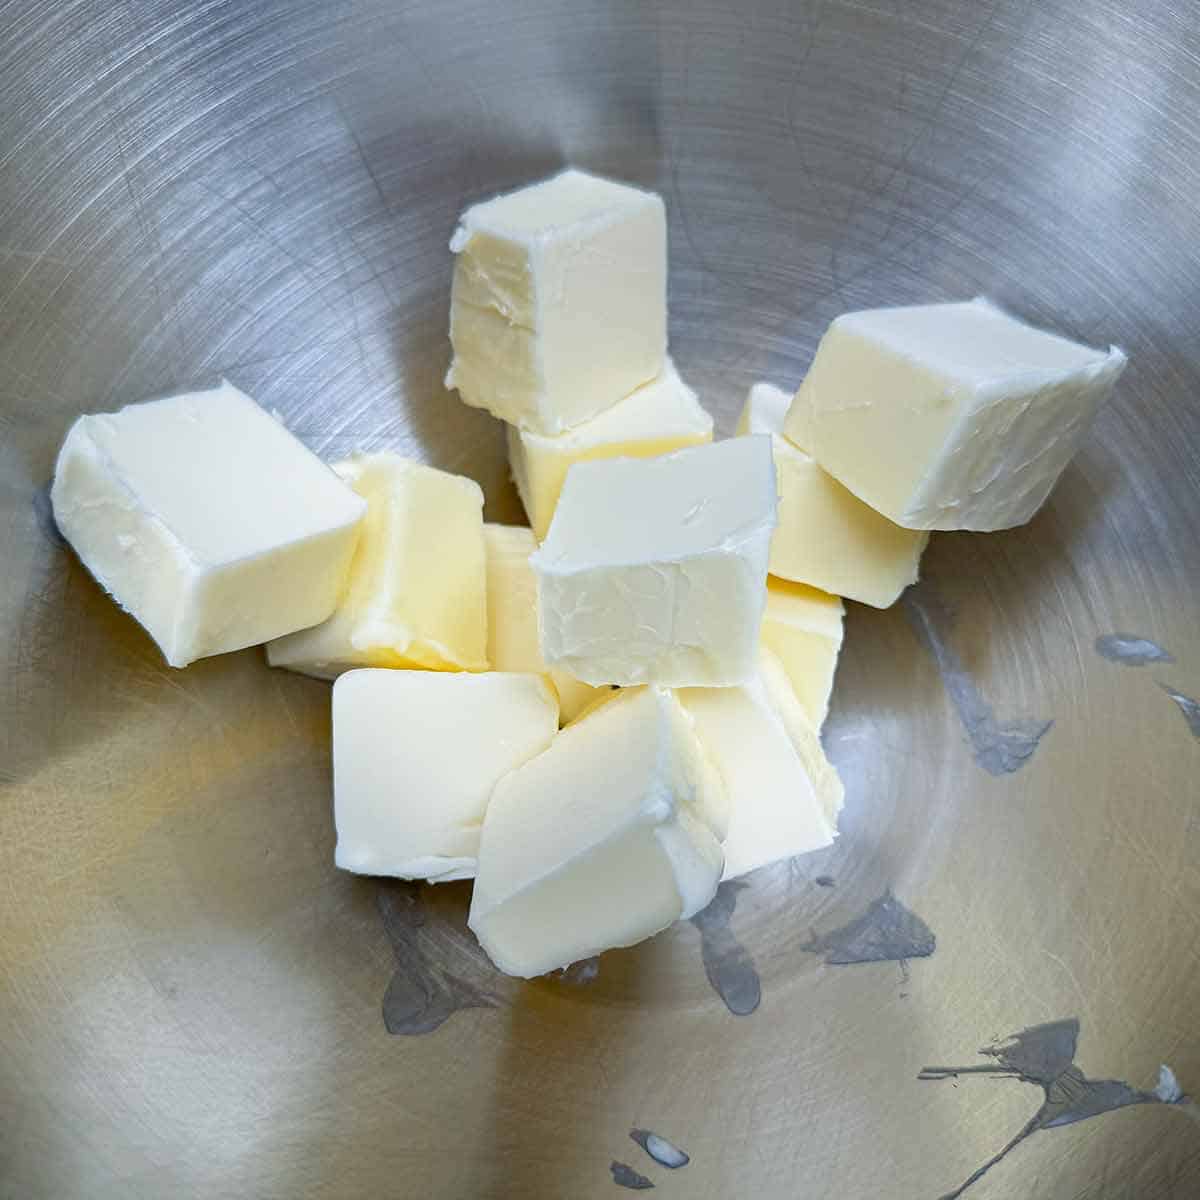 Butter cut up in a mixer bowl.